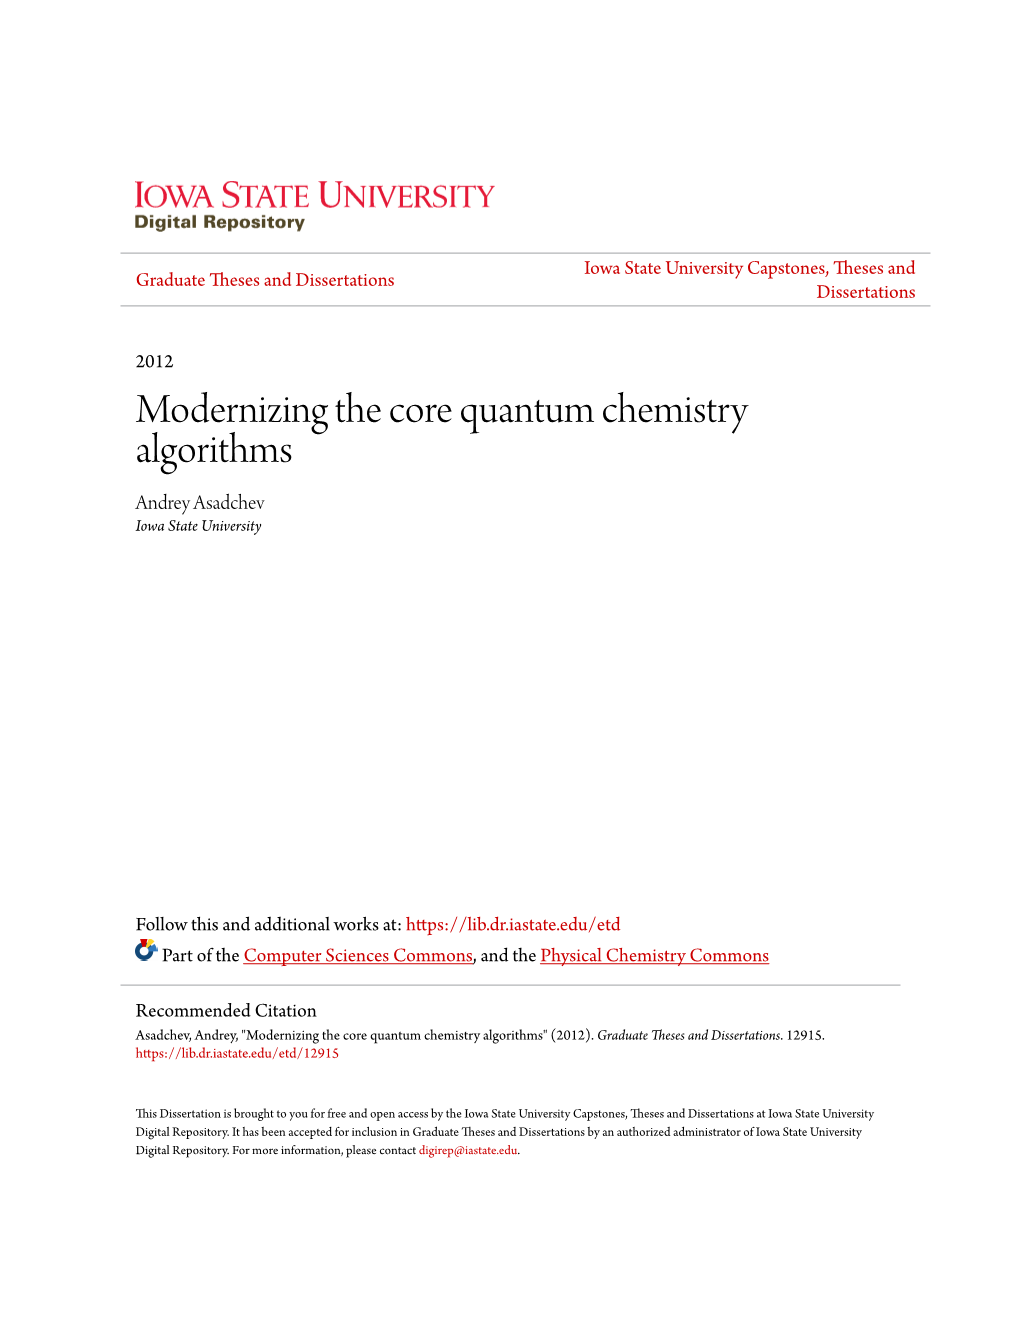 Modernizing the Core Quantum Chemistry Algorithms Andrey Asadchev Iowa State University